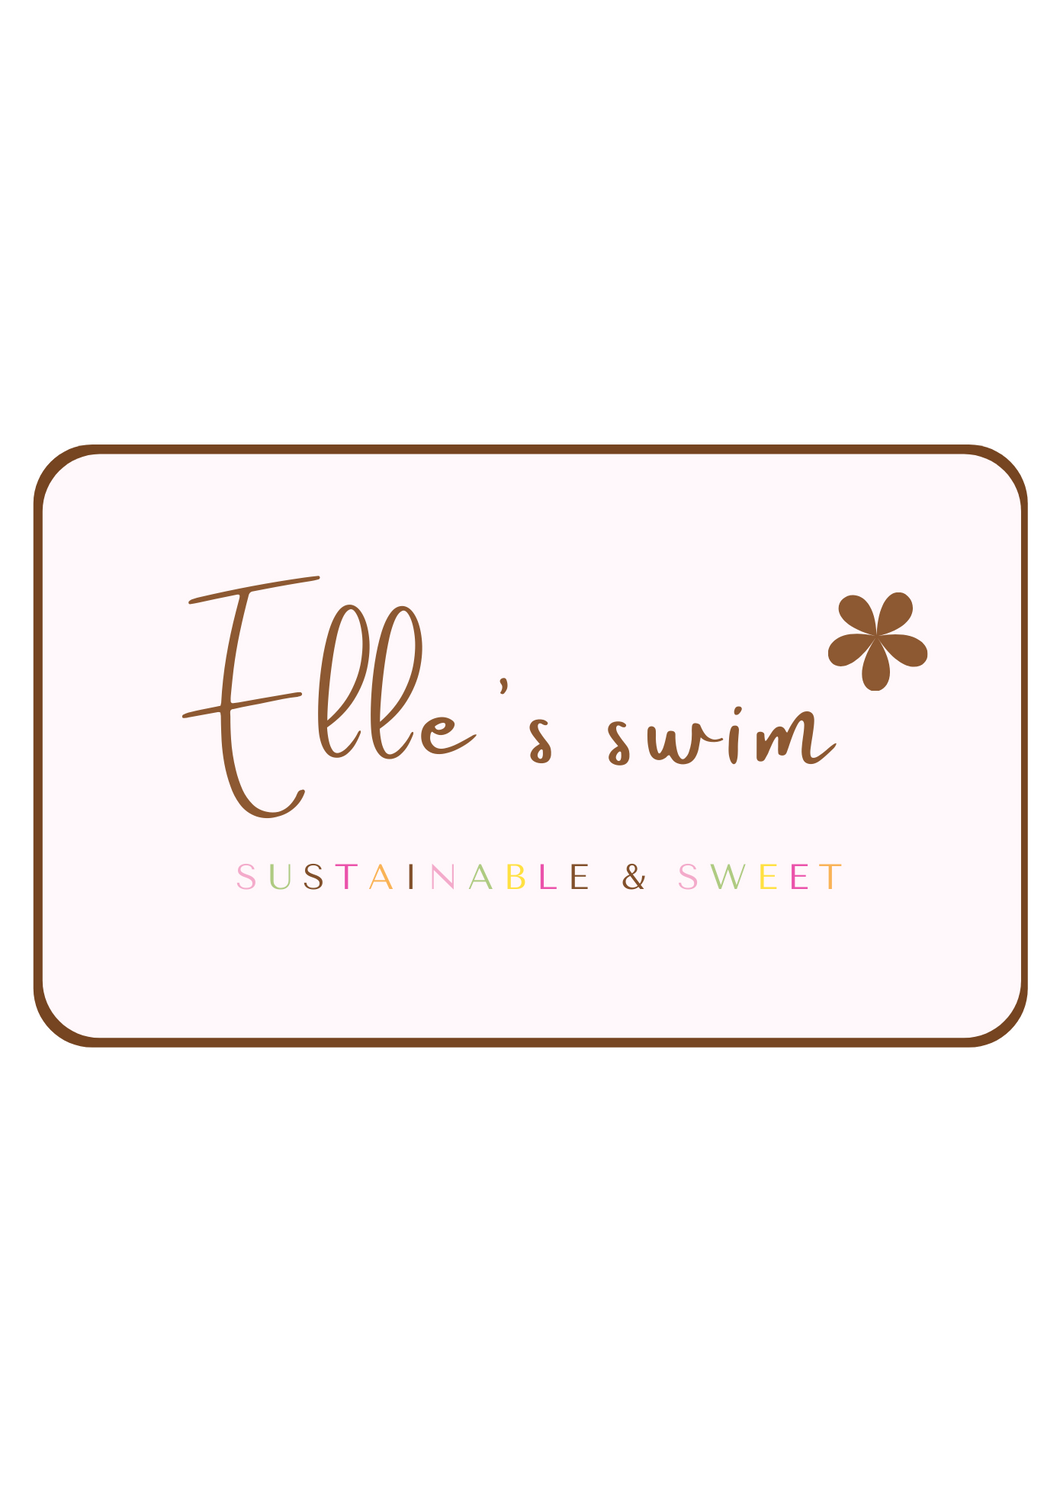 Sustainable swimwear gift card for luxury swim purchases.